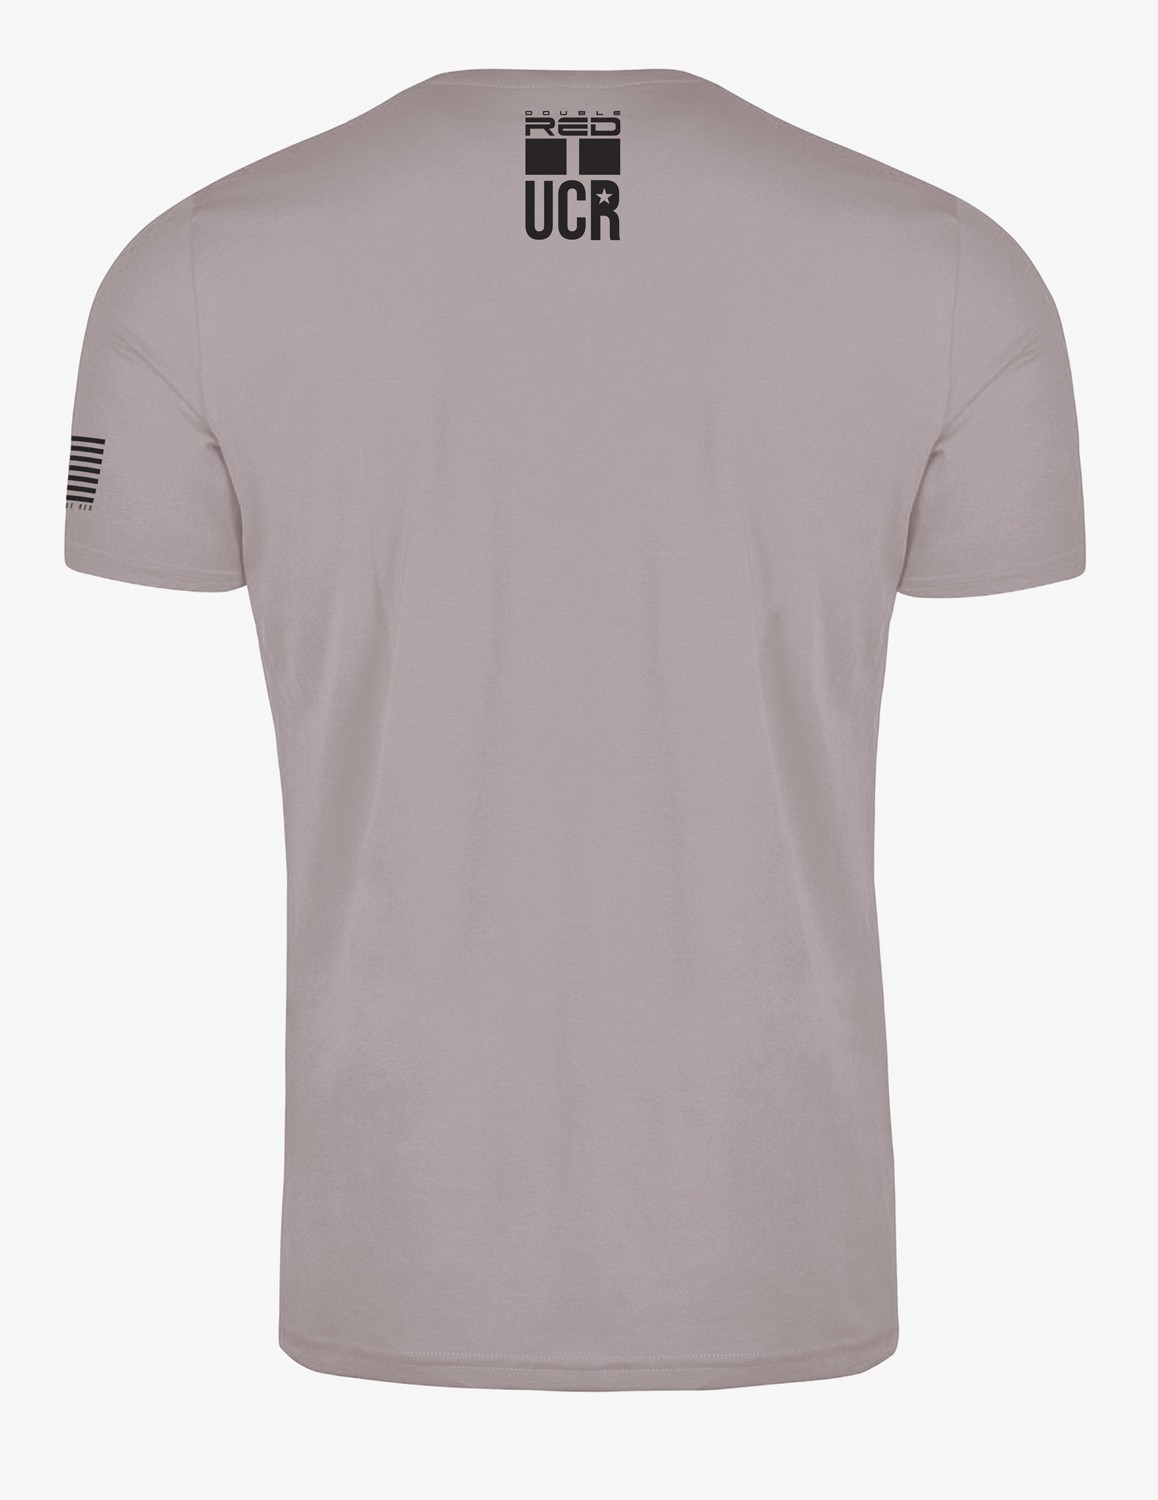 United Cartels Of Red UCR T-shirt Grey/Black